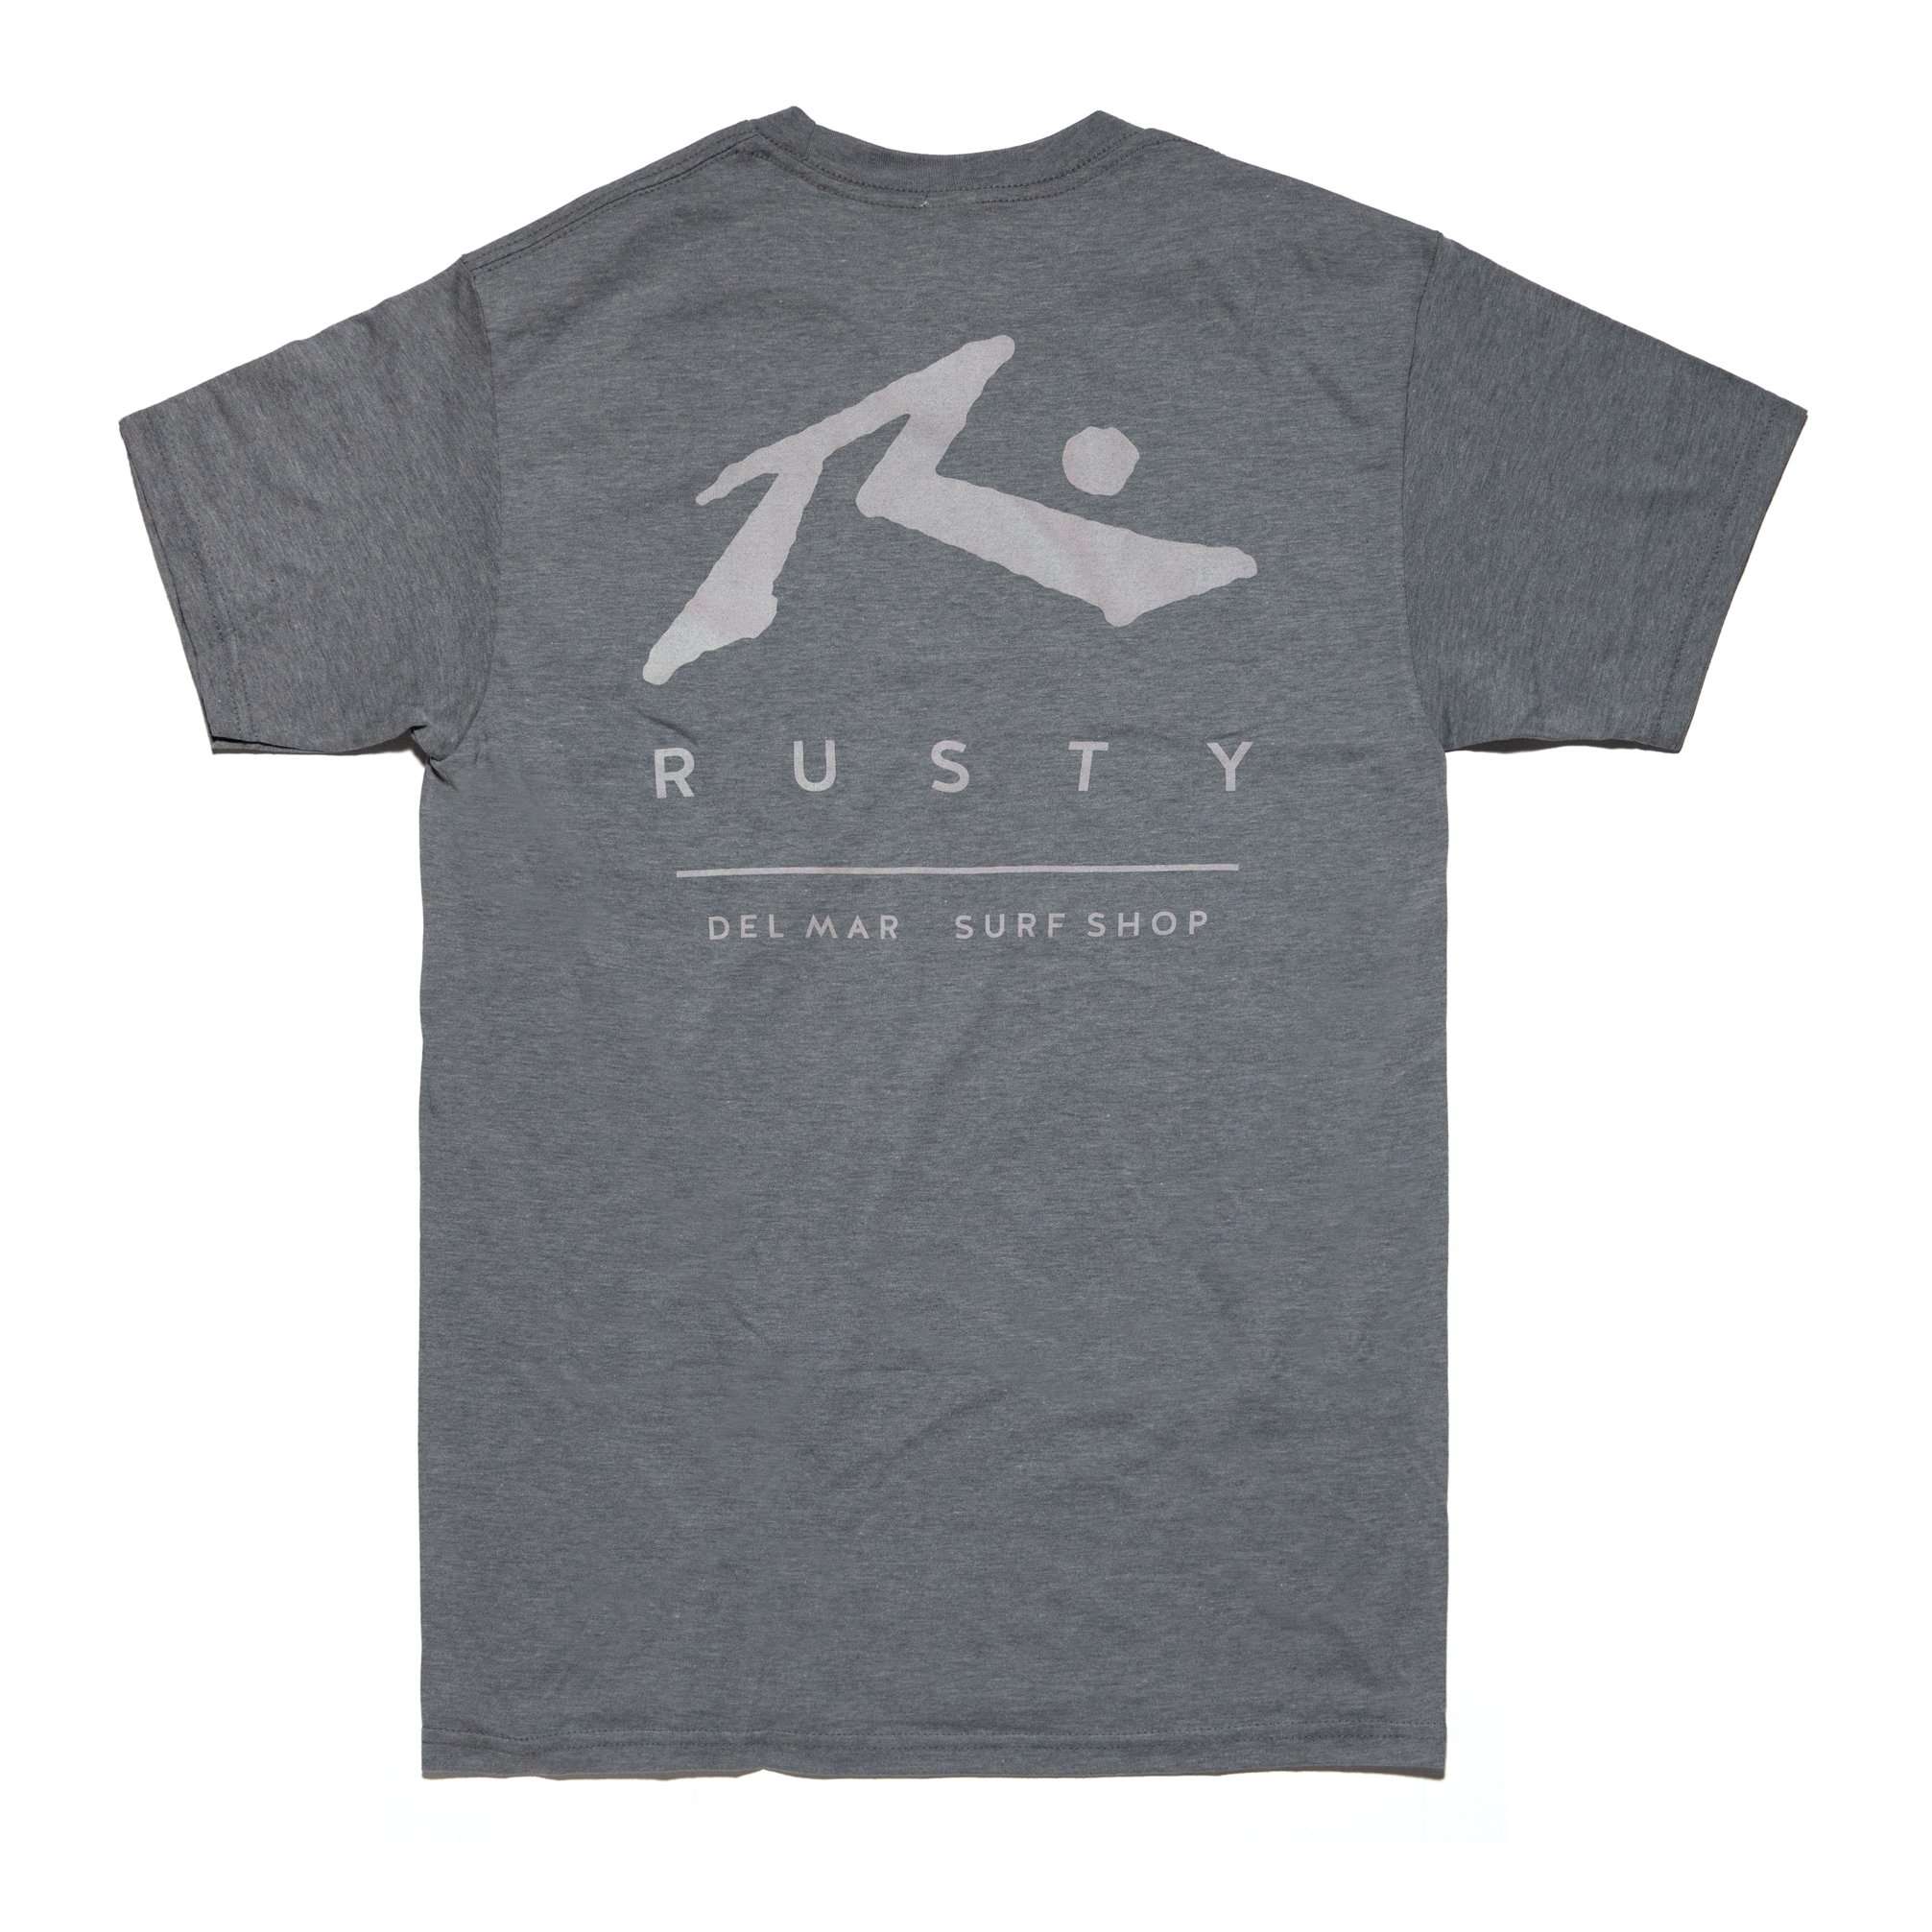 Rusty Del Mar Full Original in Ash Heather - T-Shirt